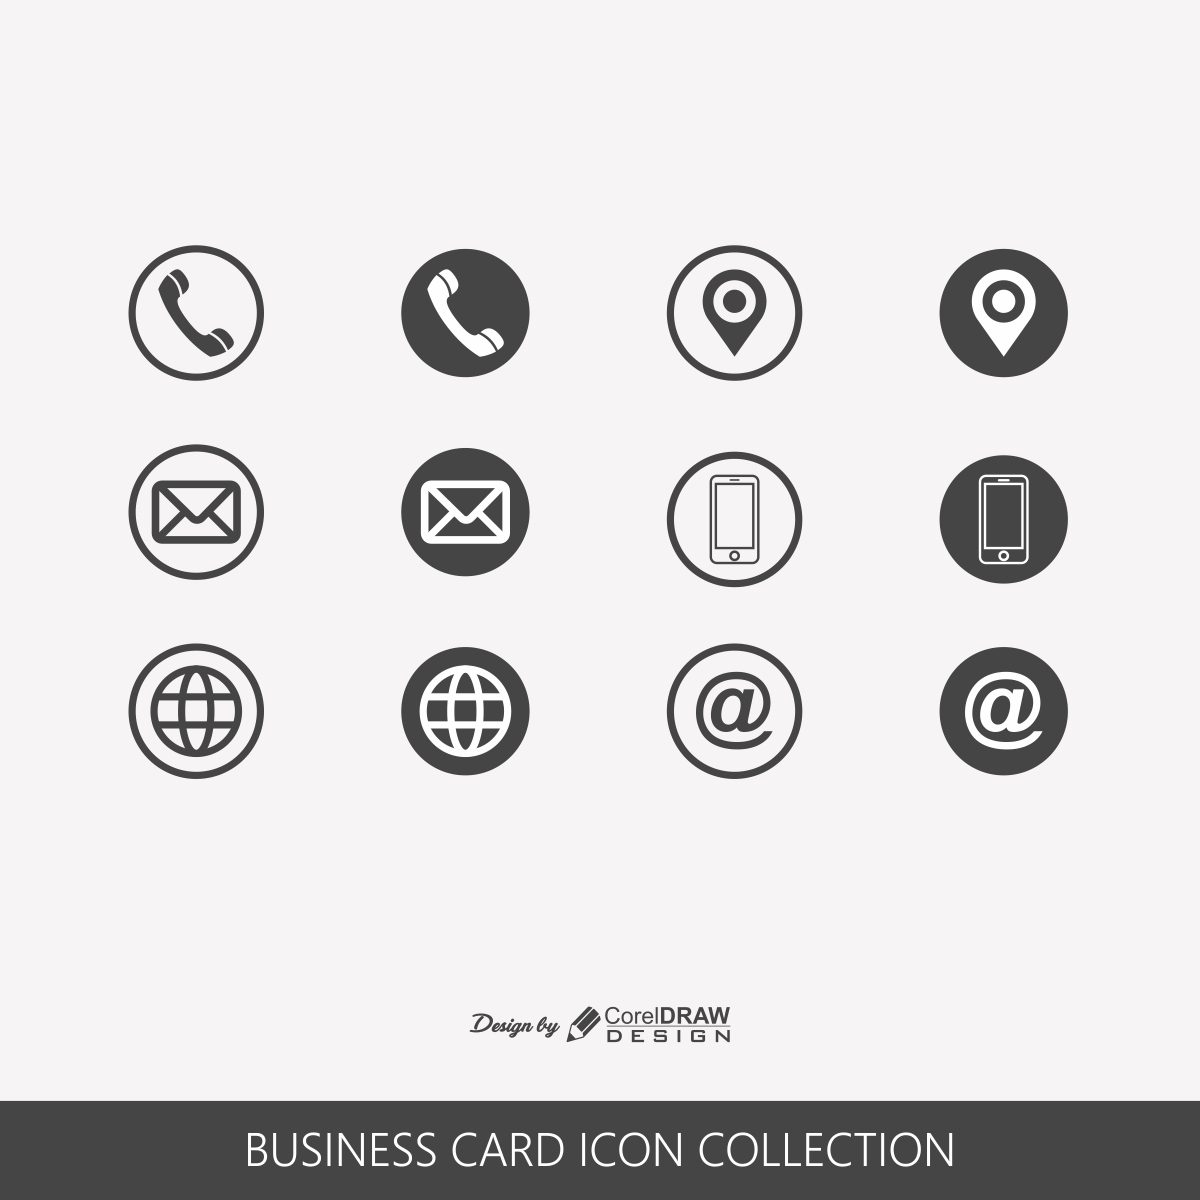 Corel Draw Icon - Free PNG & SVG 478805 - Noun Project